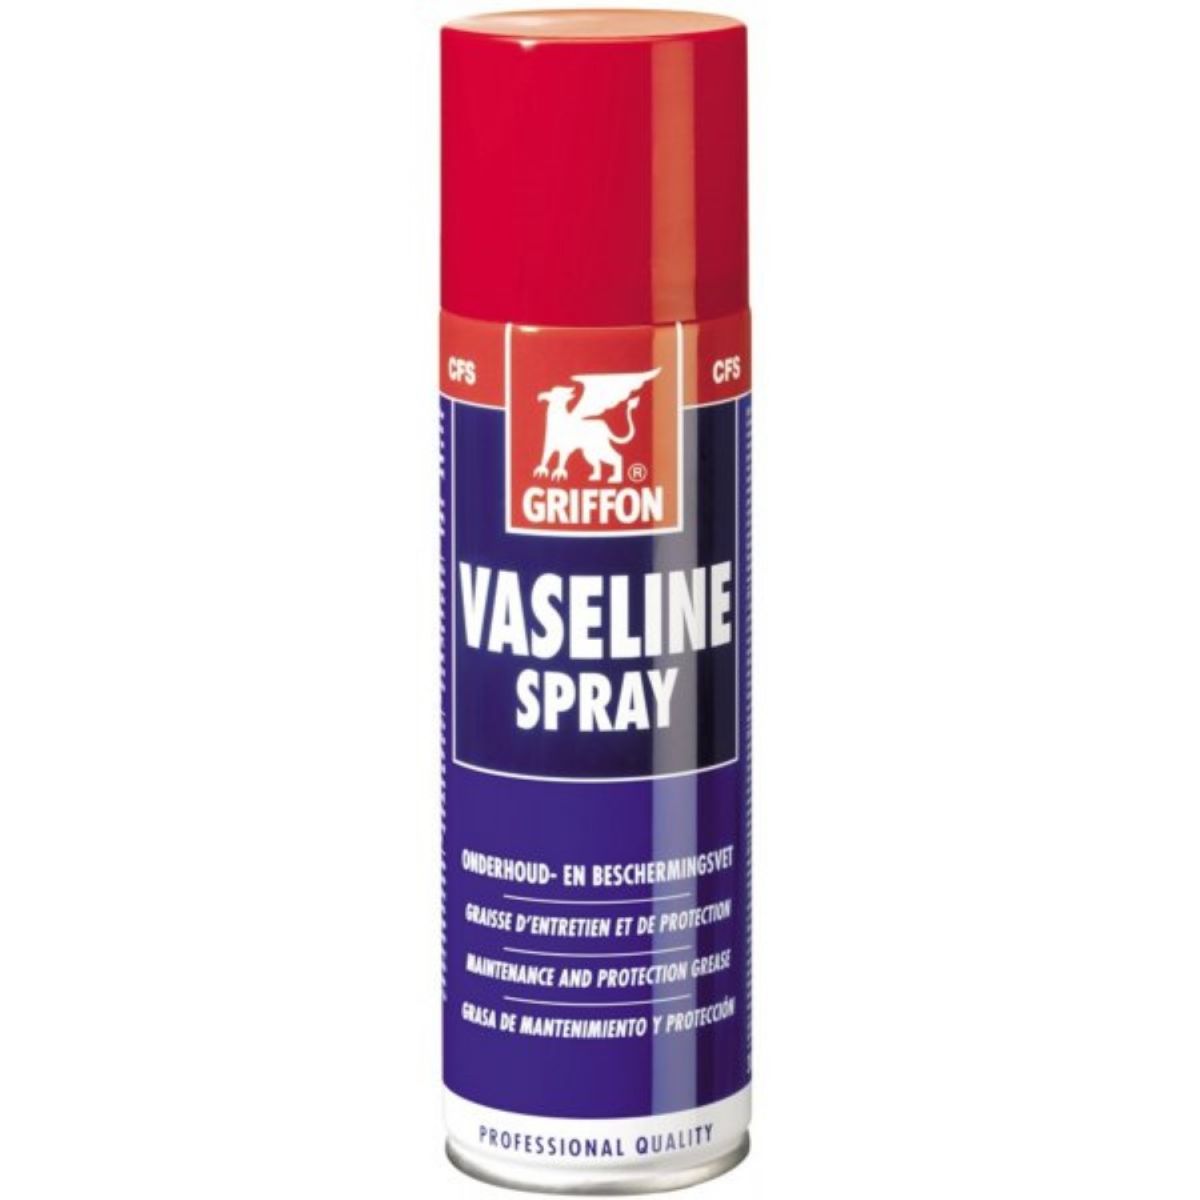 Griffon Vaseline Spray 300ml (1st)